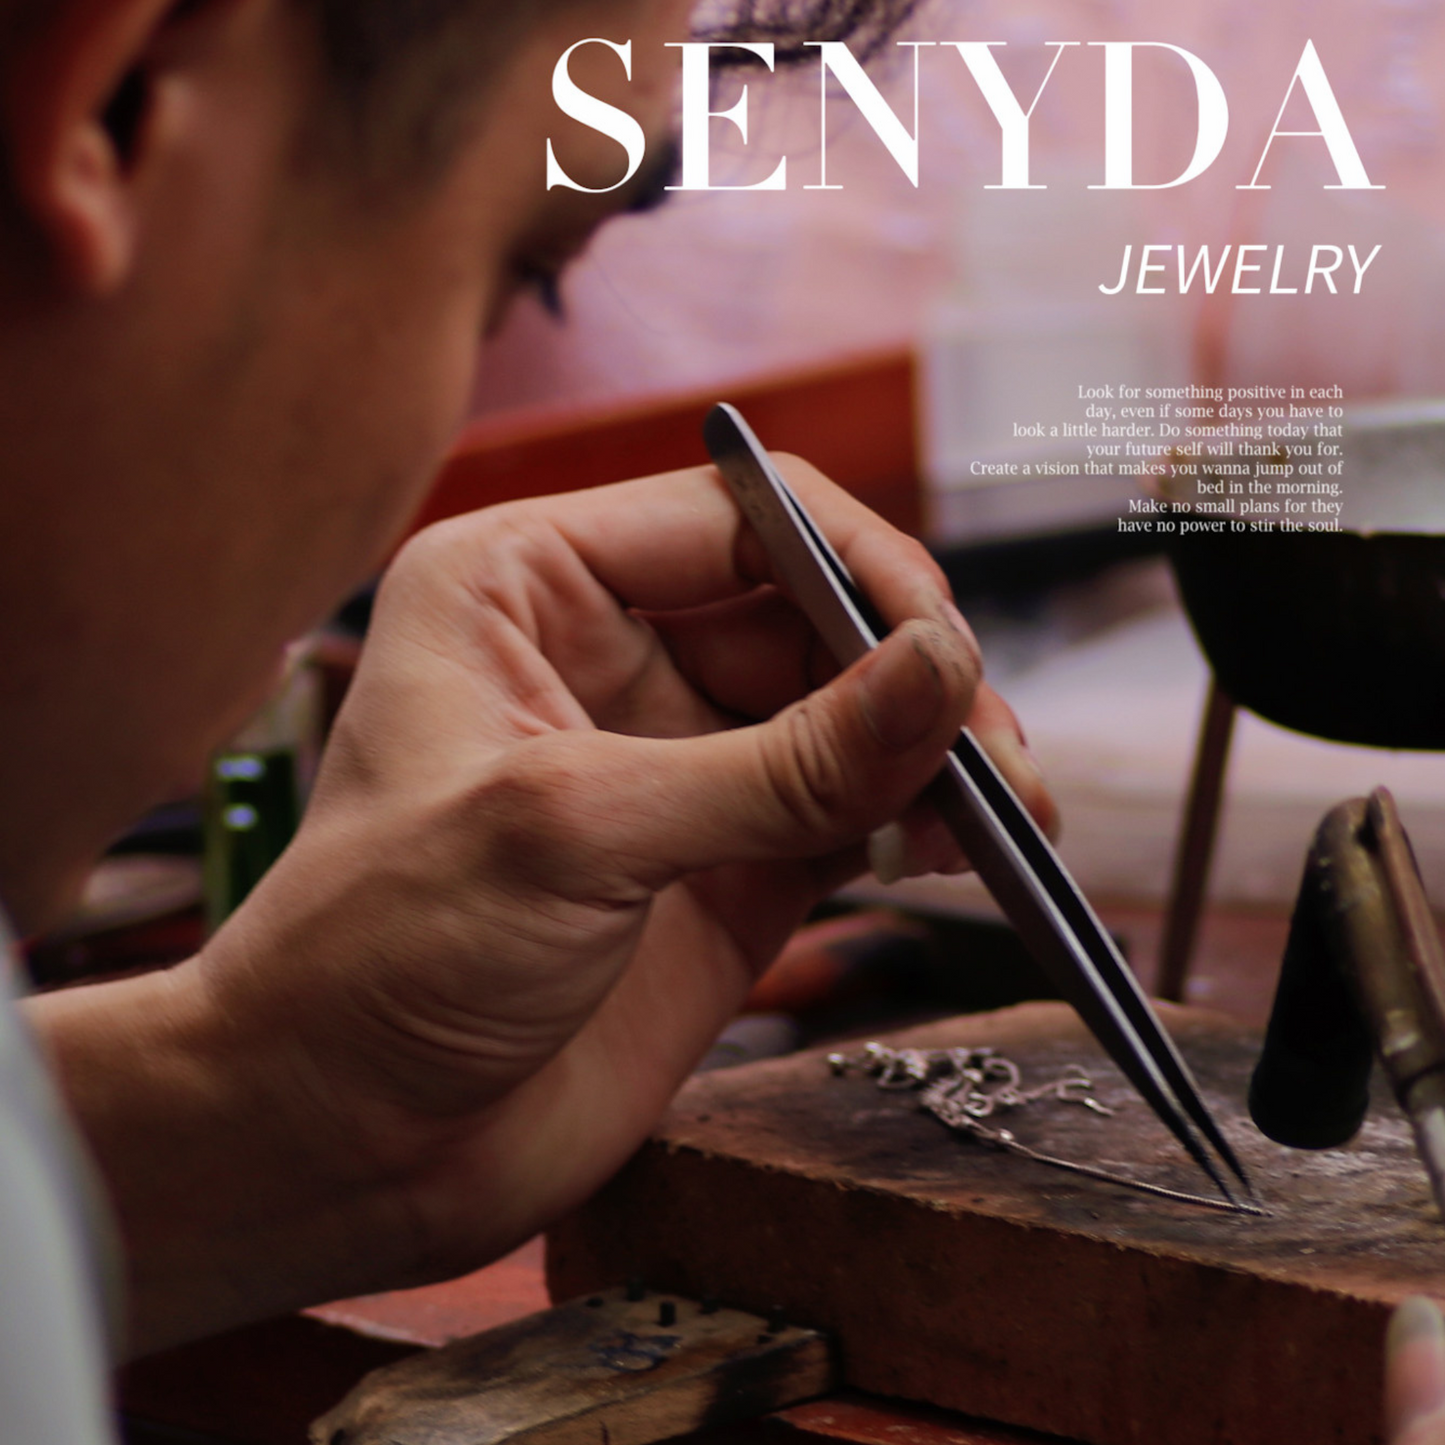 Senyda 10K Solid Gold Special Ring - "THE ATLANTIS" RING